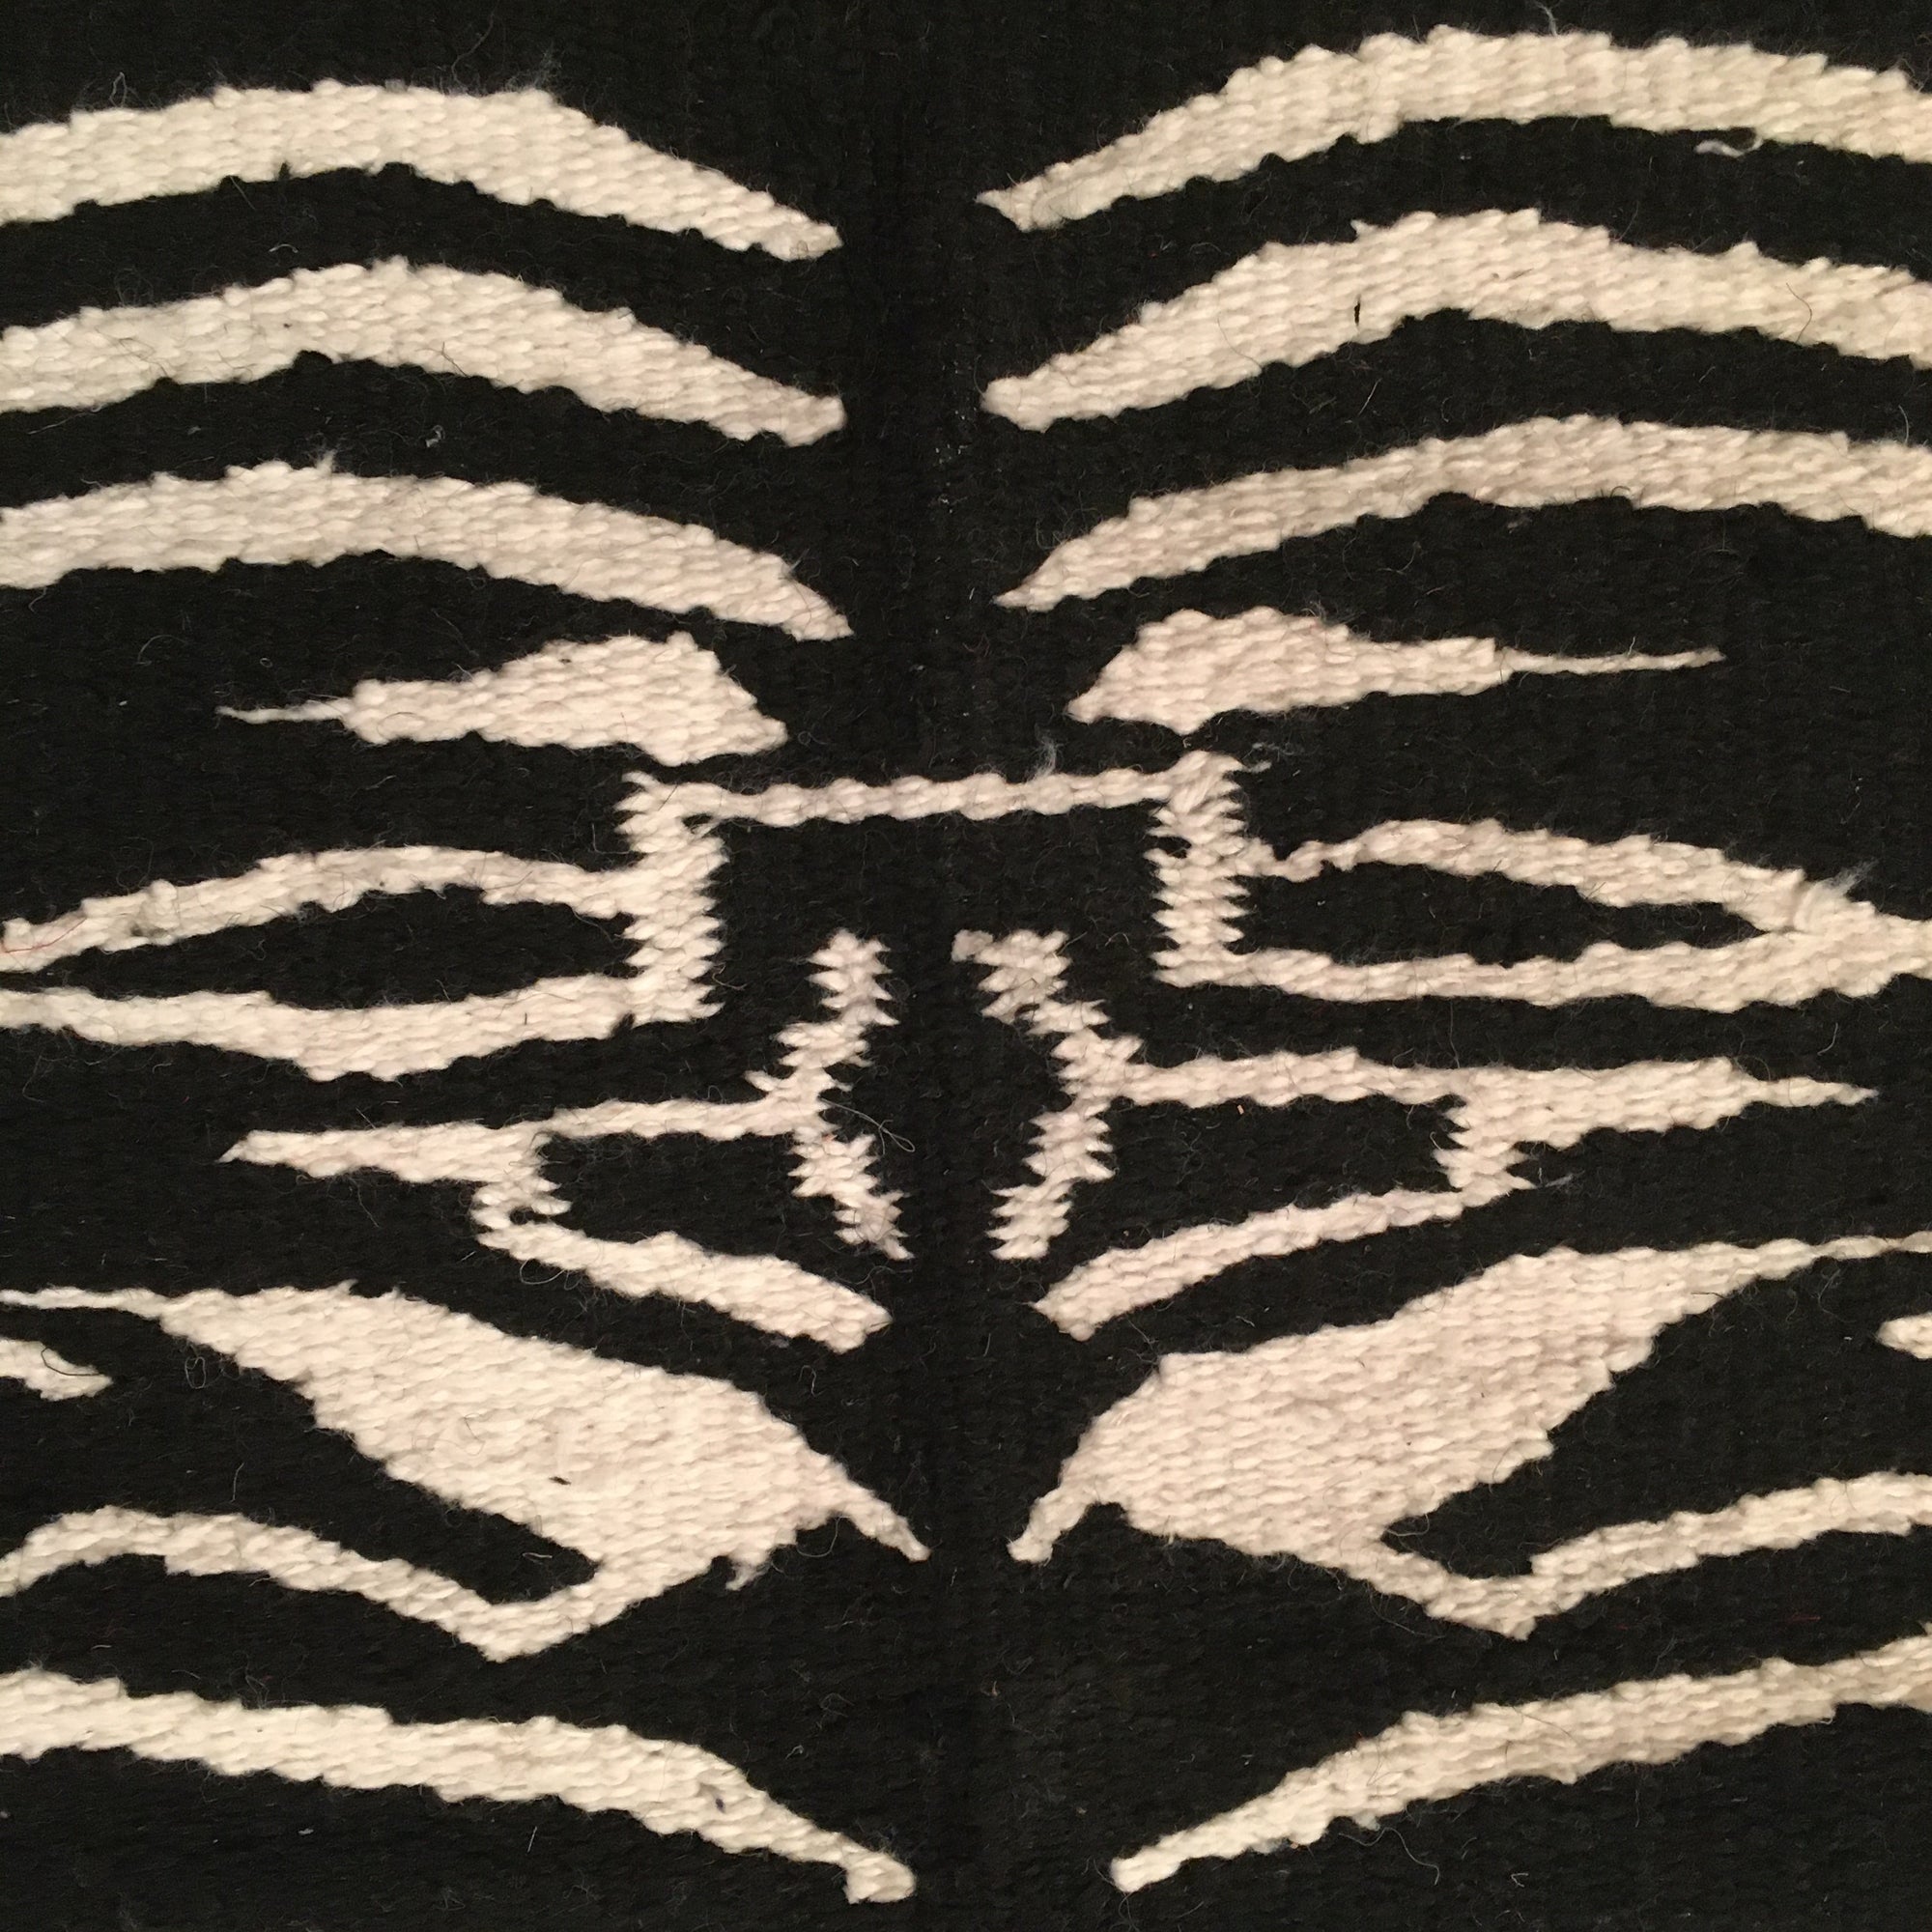 Zebra Saddle Blanket Black and White